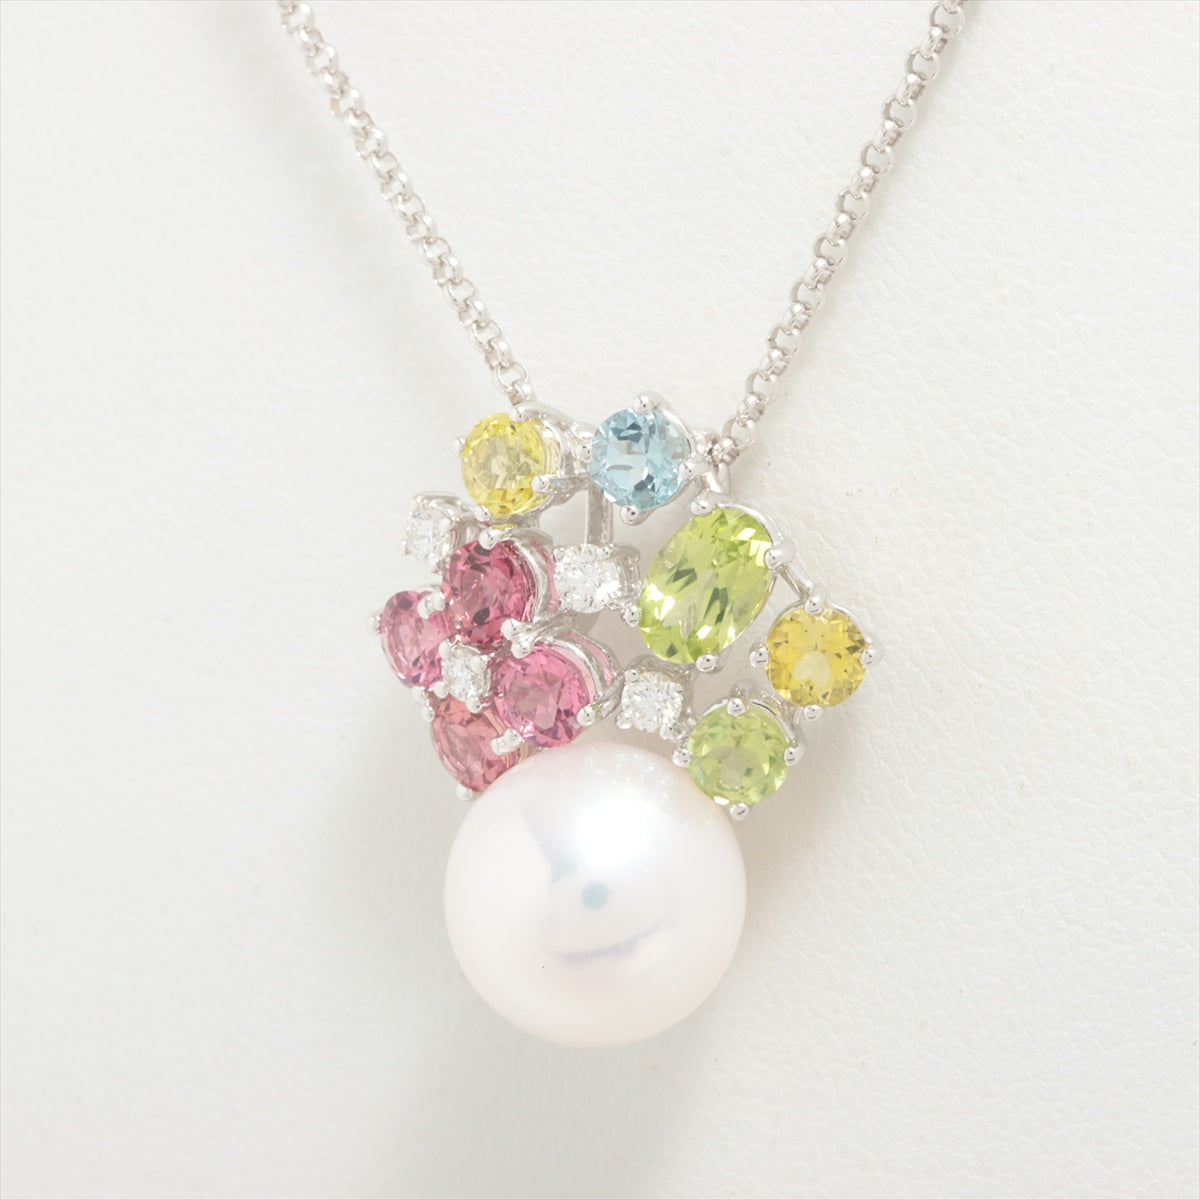 TASAKI Pearl Colored stone Necklace K18WG 7.5g 0.13 Approx. 10.0 mm diamond